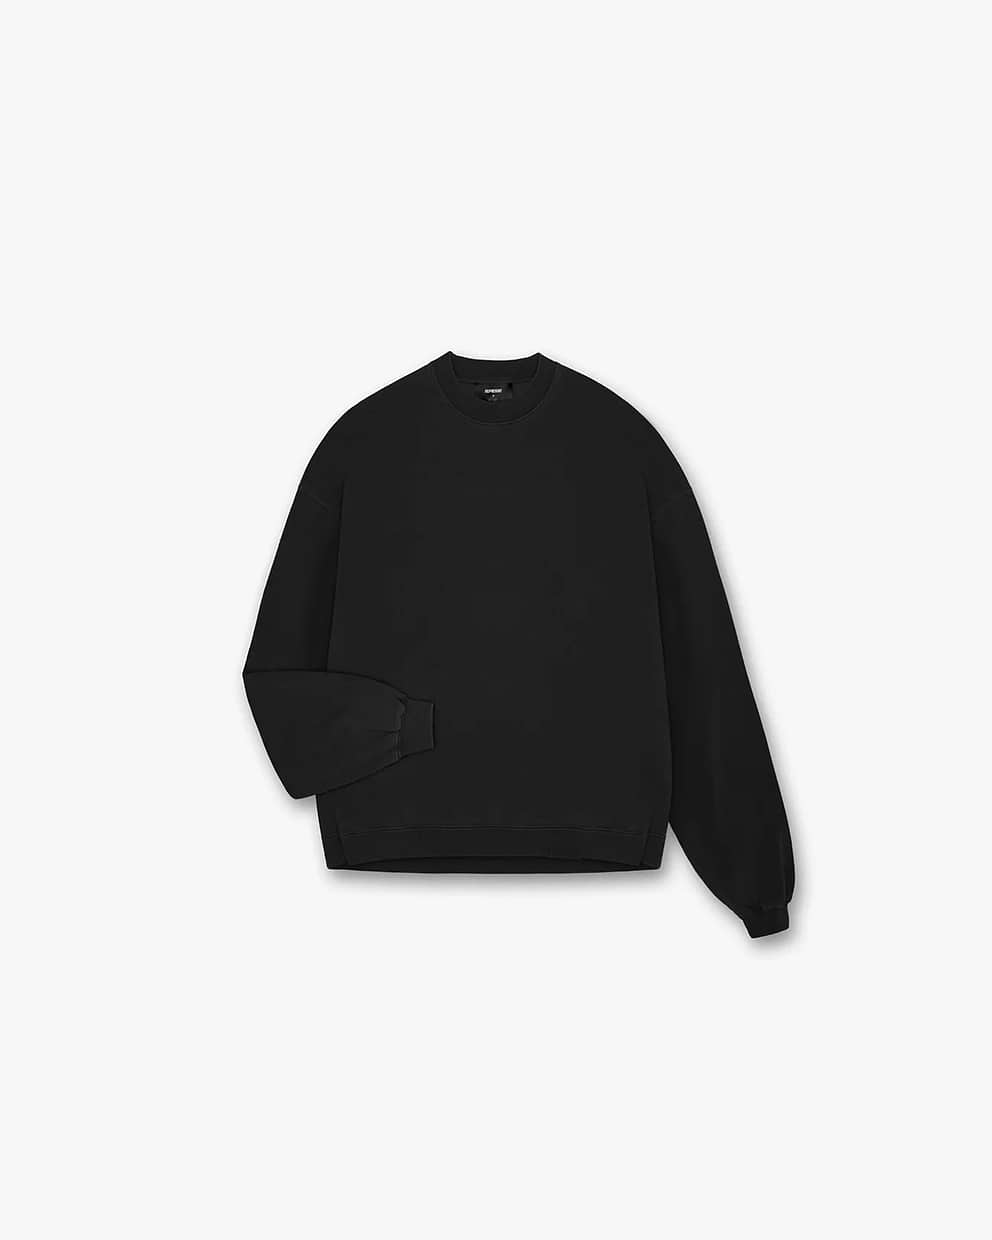 Initial Sweater - Jet Black